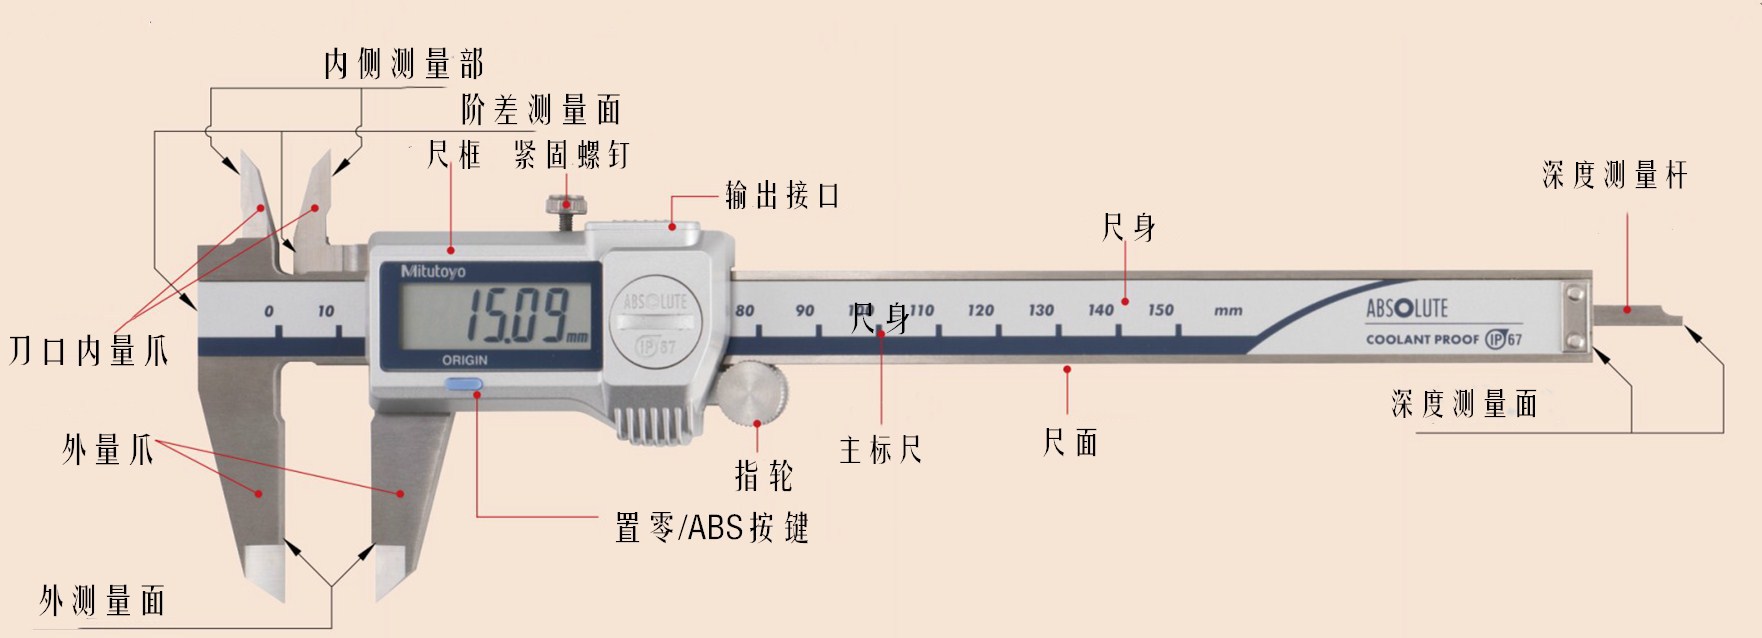 Mitutoyo三丰防水型IP67数显卡尺500-702-20示例图3